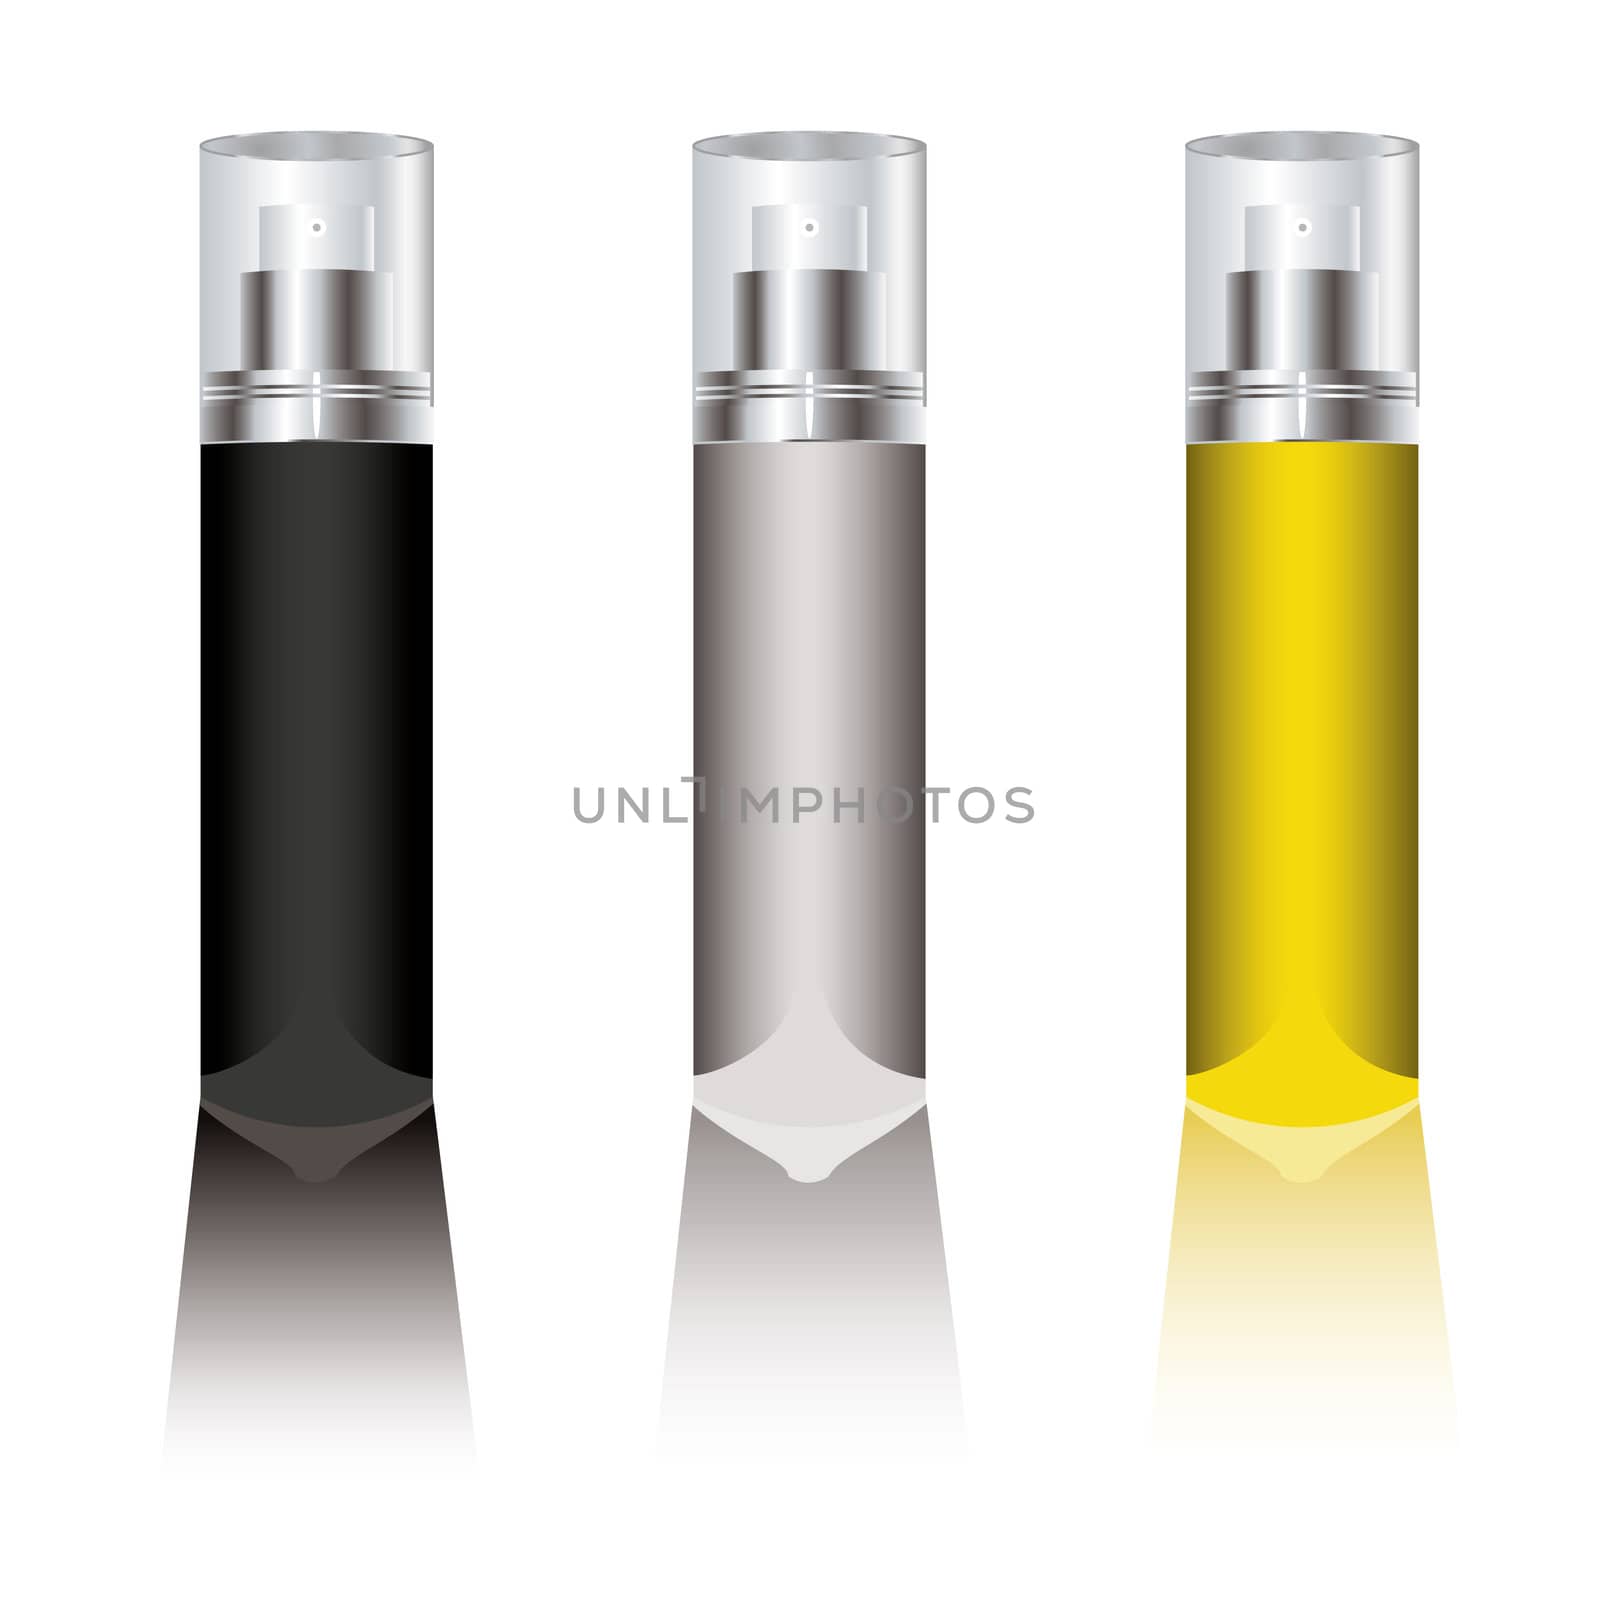 Three blank deodorant sprays with plastic transparent tops